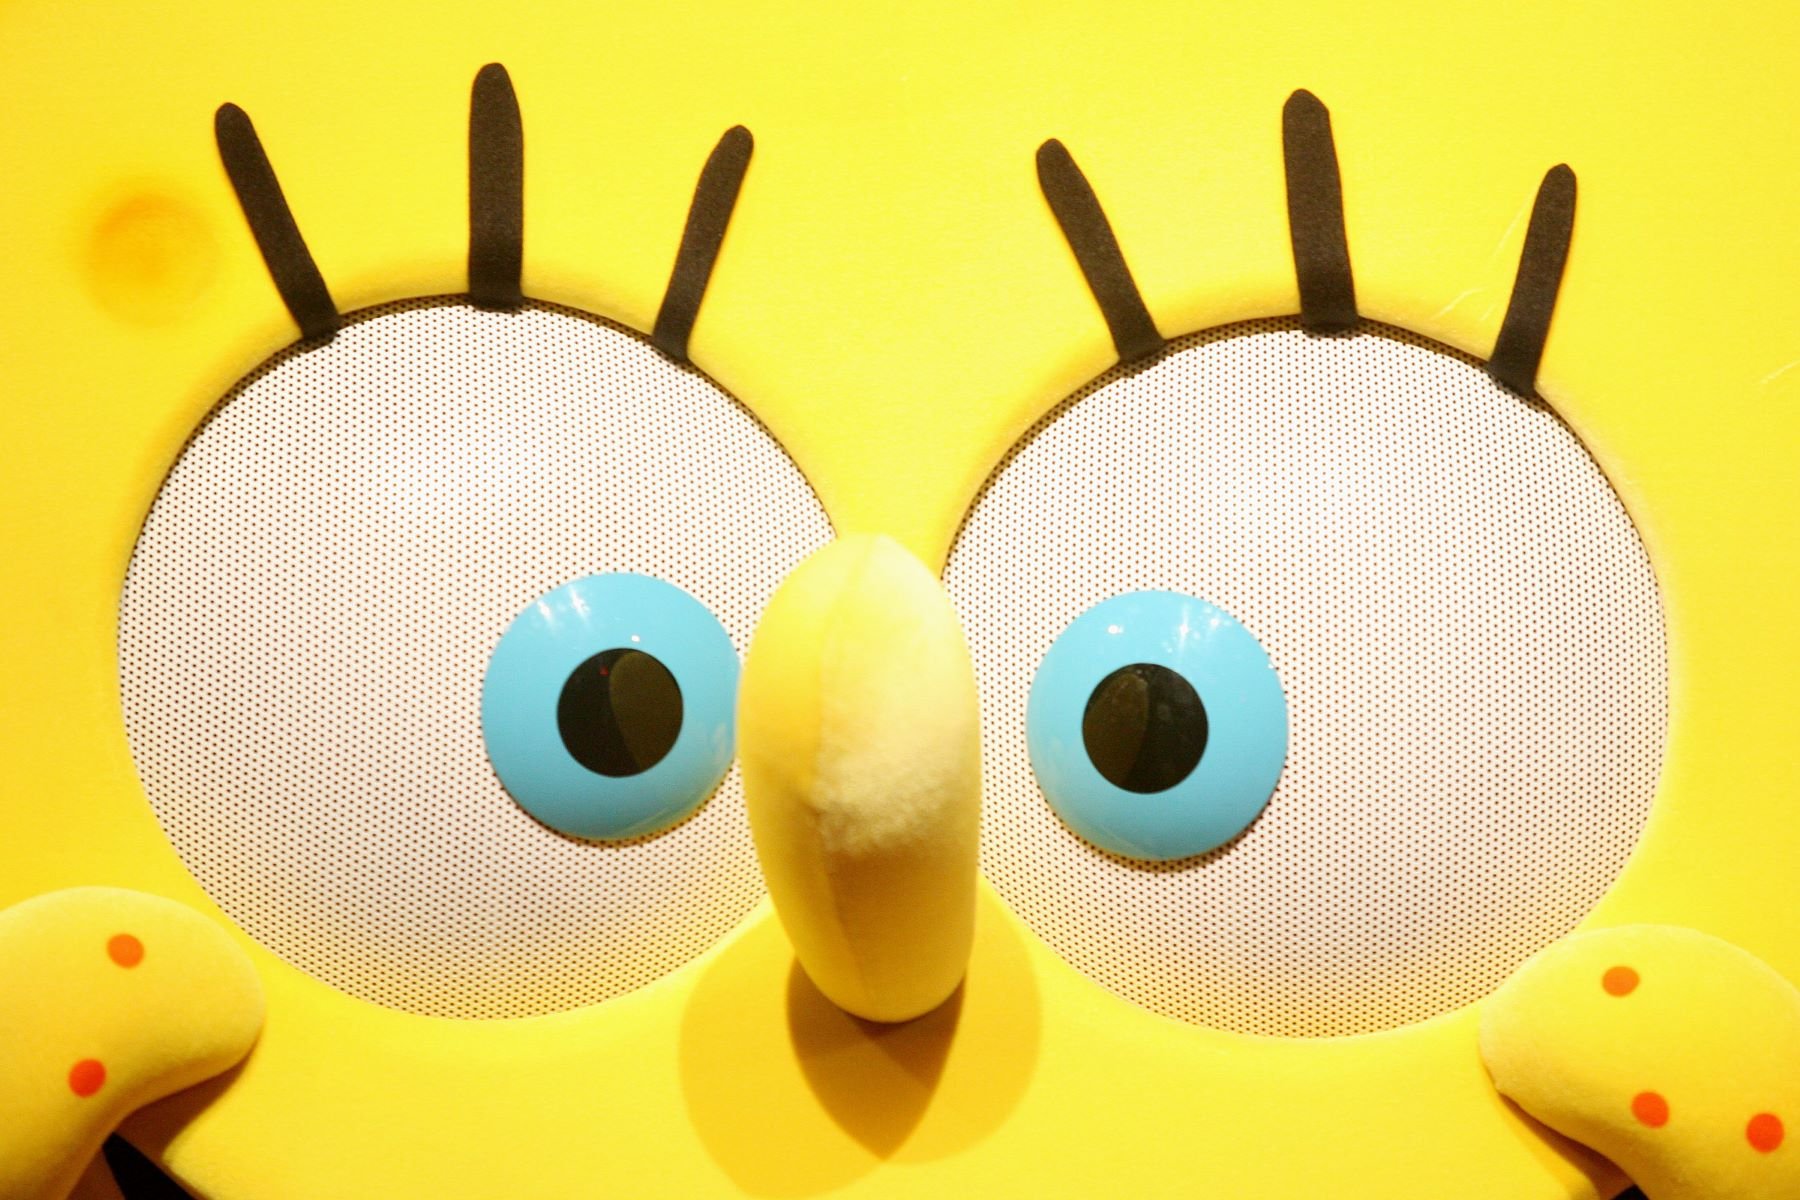 Why These ‘Spongebob Squarepants’ Episodes Aren’t on Paramount+